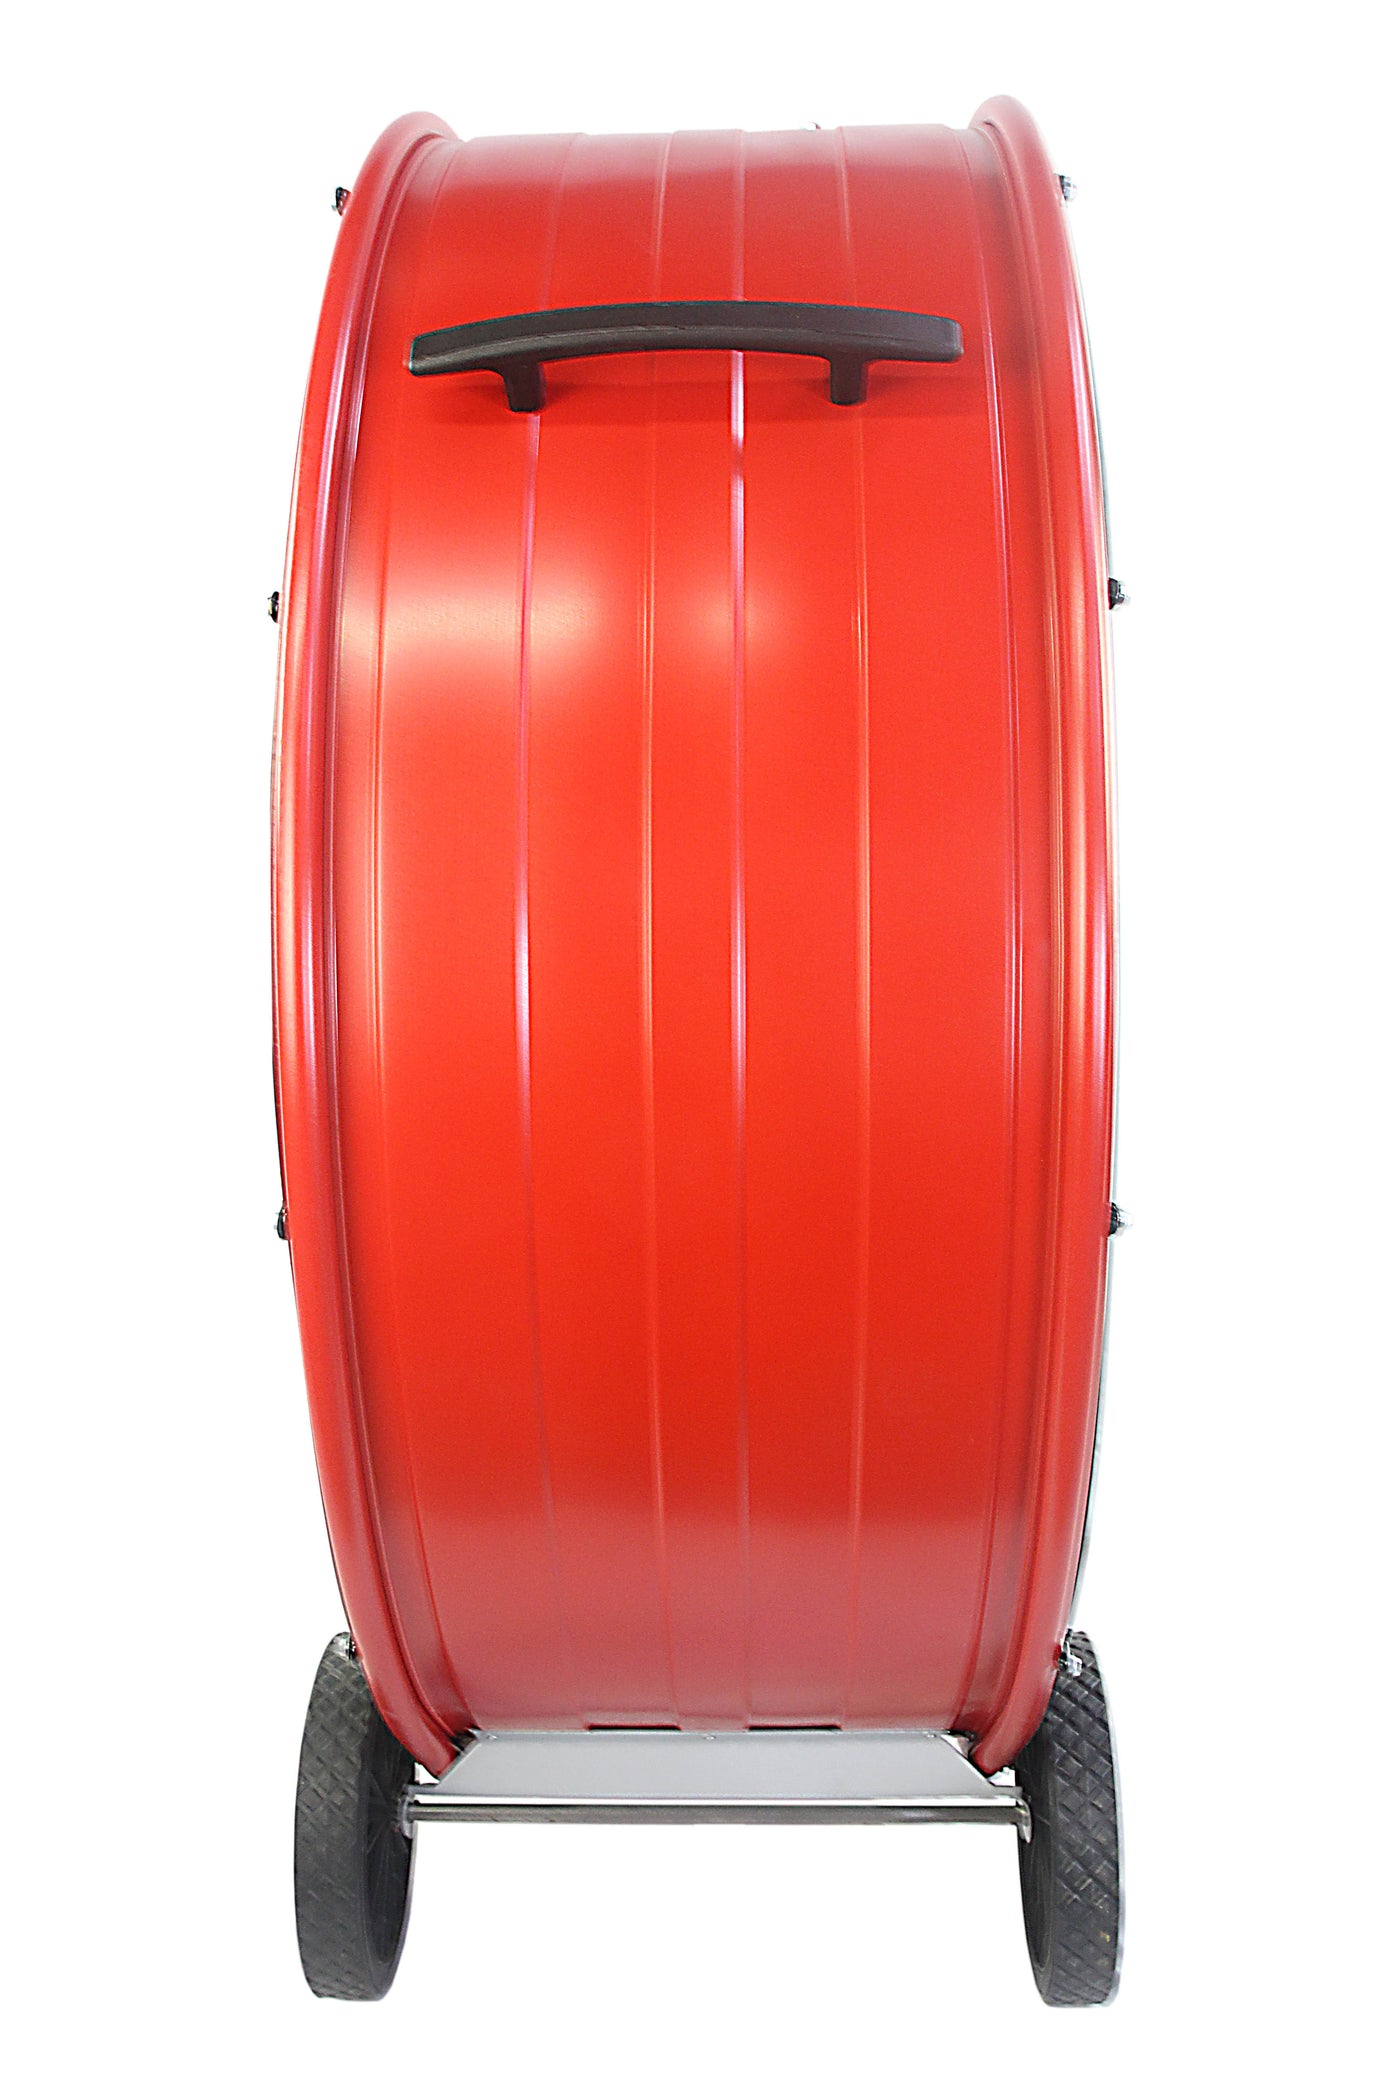 Maxx Air Professional 42" High Velocity Industrial Belt Drive Barrel Fan